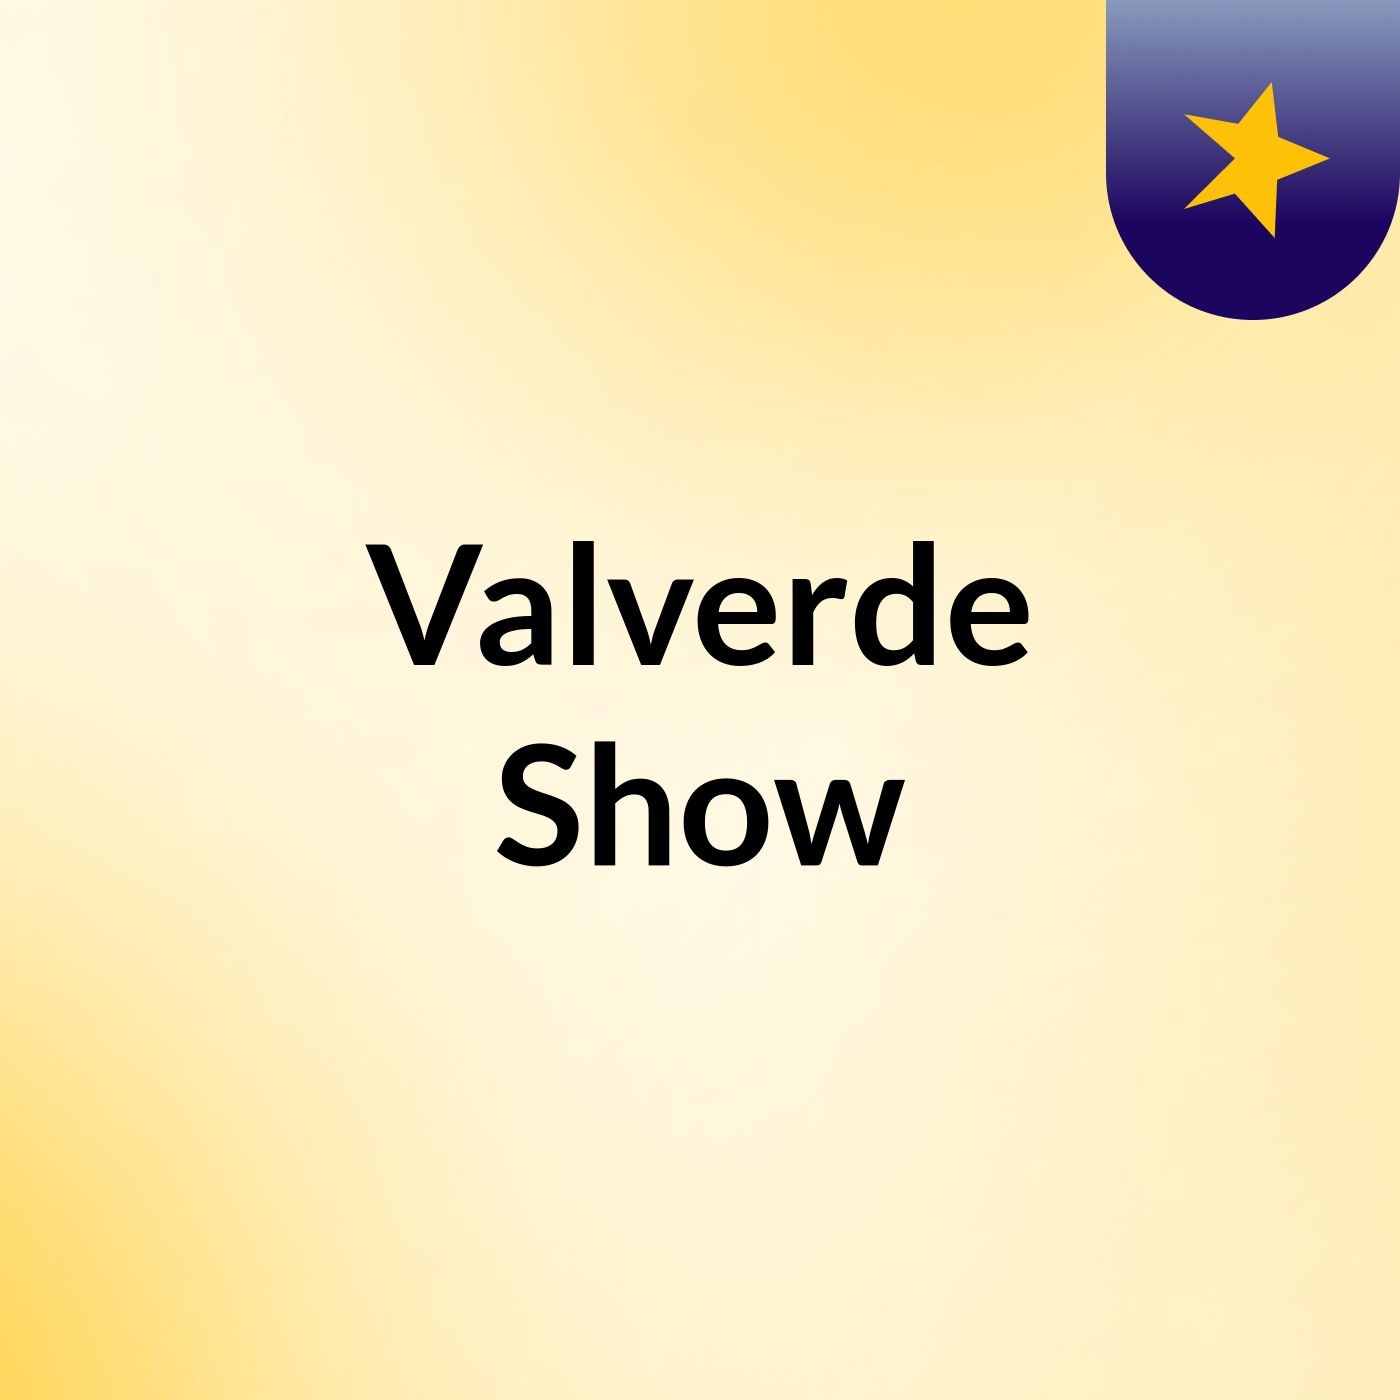 Valverde'Show